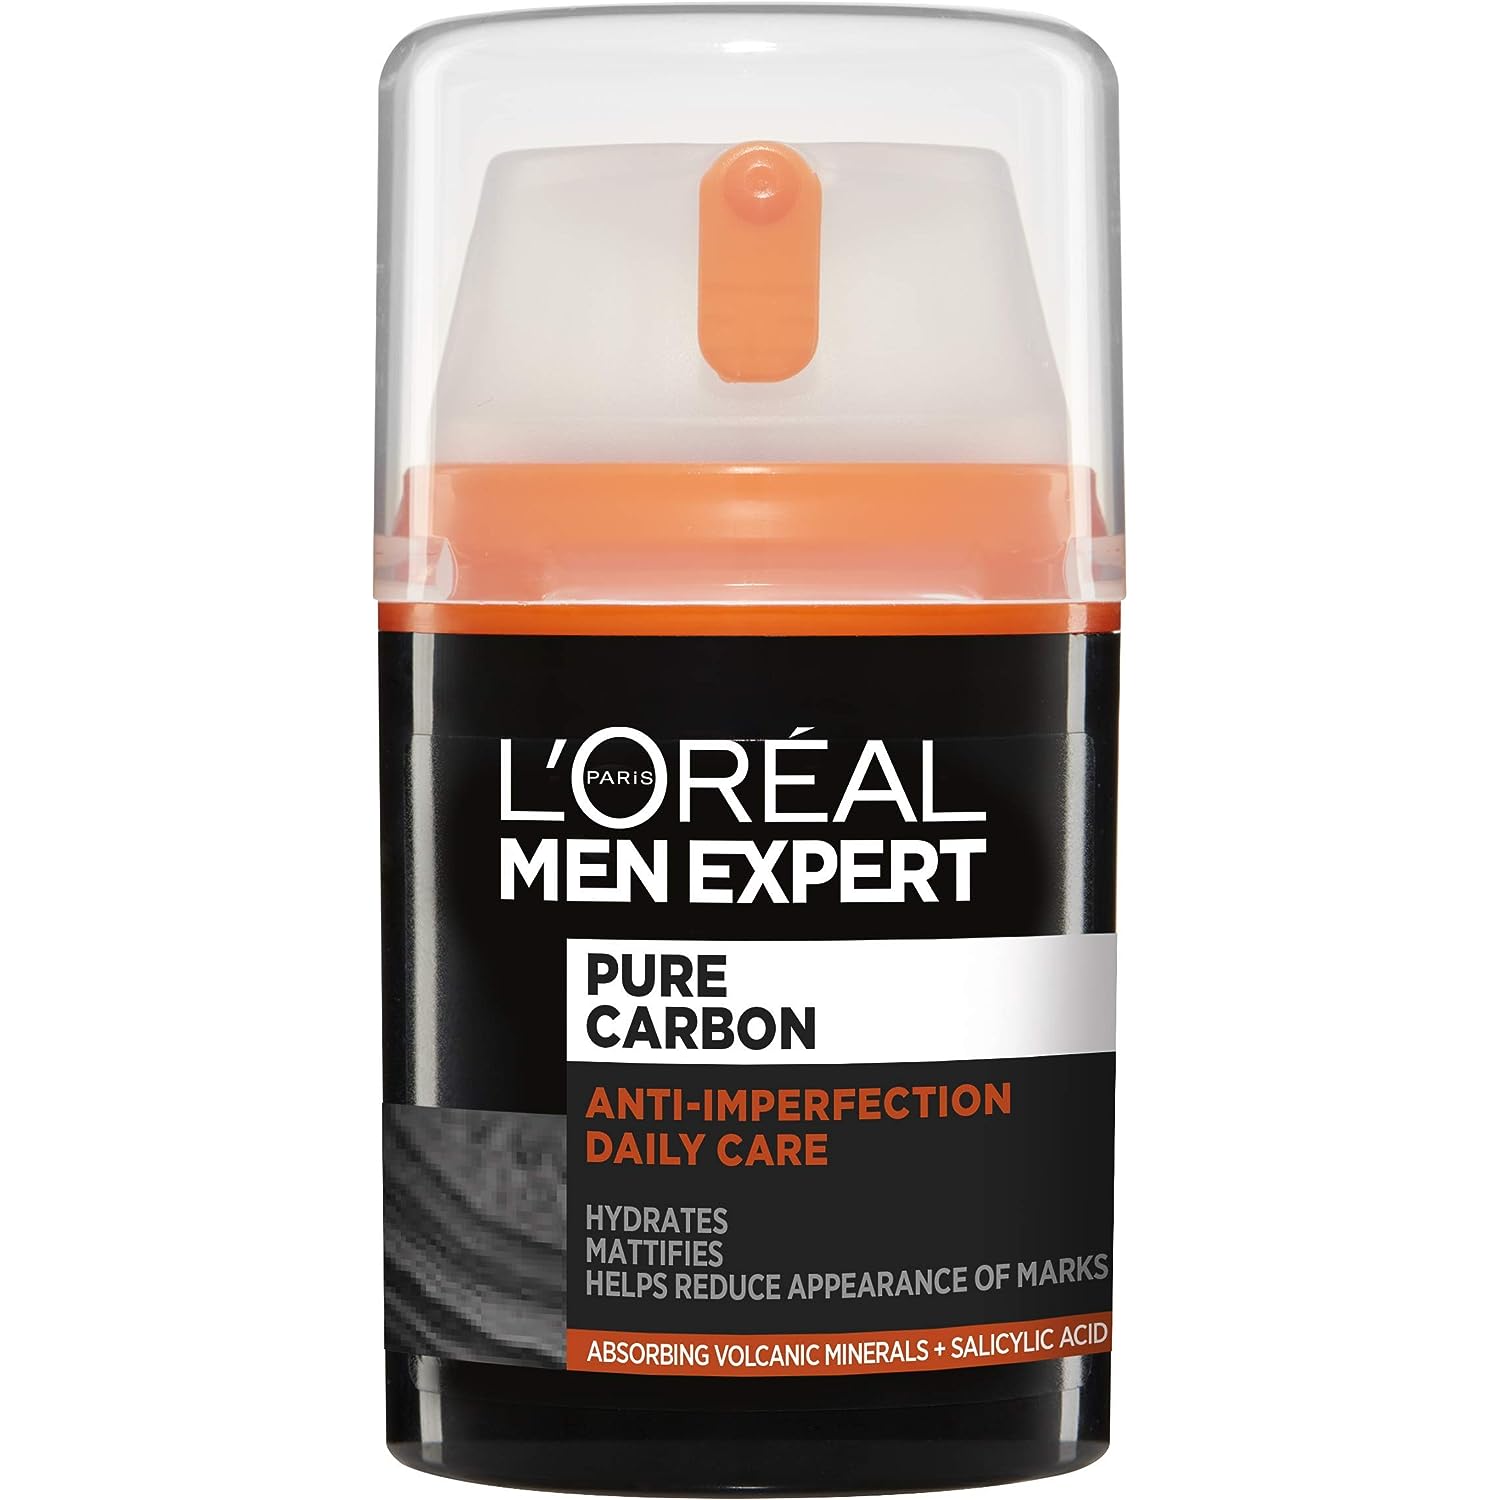 L'Oreal Men Expert Pure Carbon Anti Imperfection Daily Care Moisturiser (50 ml) Beautiful